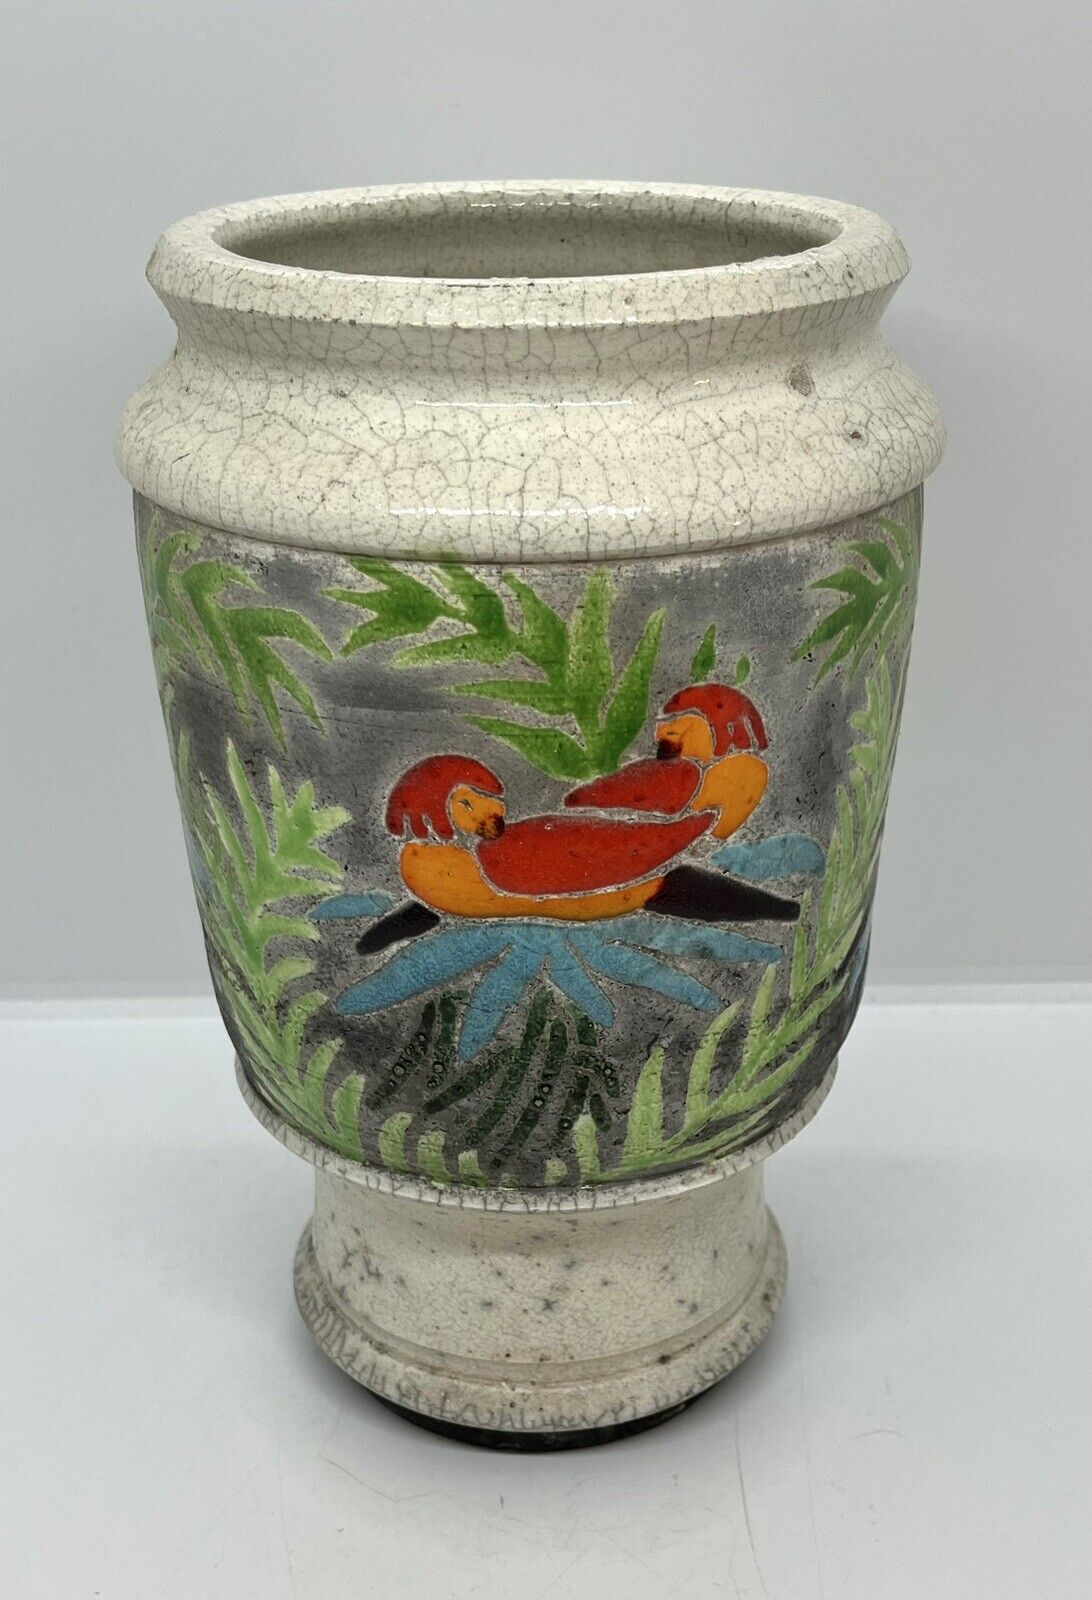 Vintage Parrot 10” Ceramic Plantar Marked “Chick”